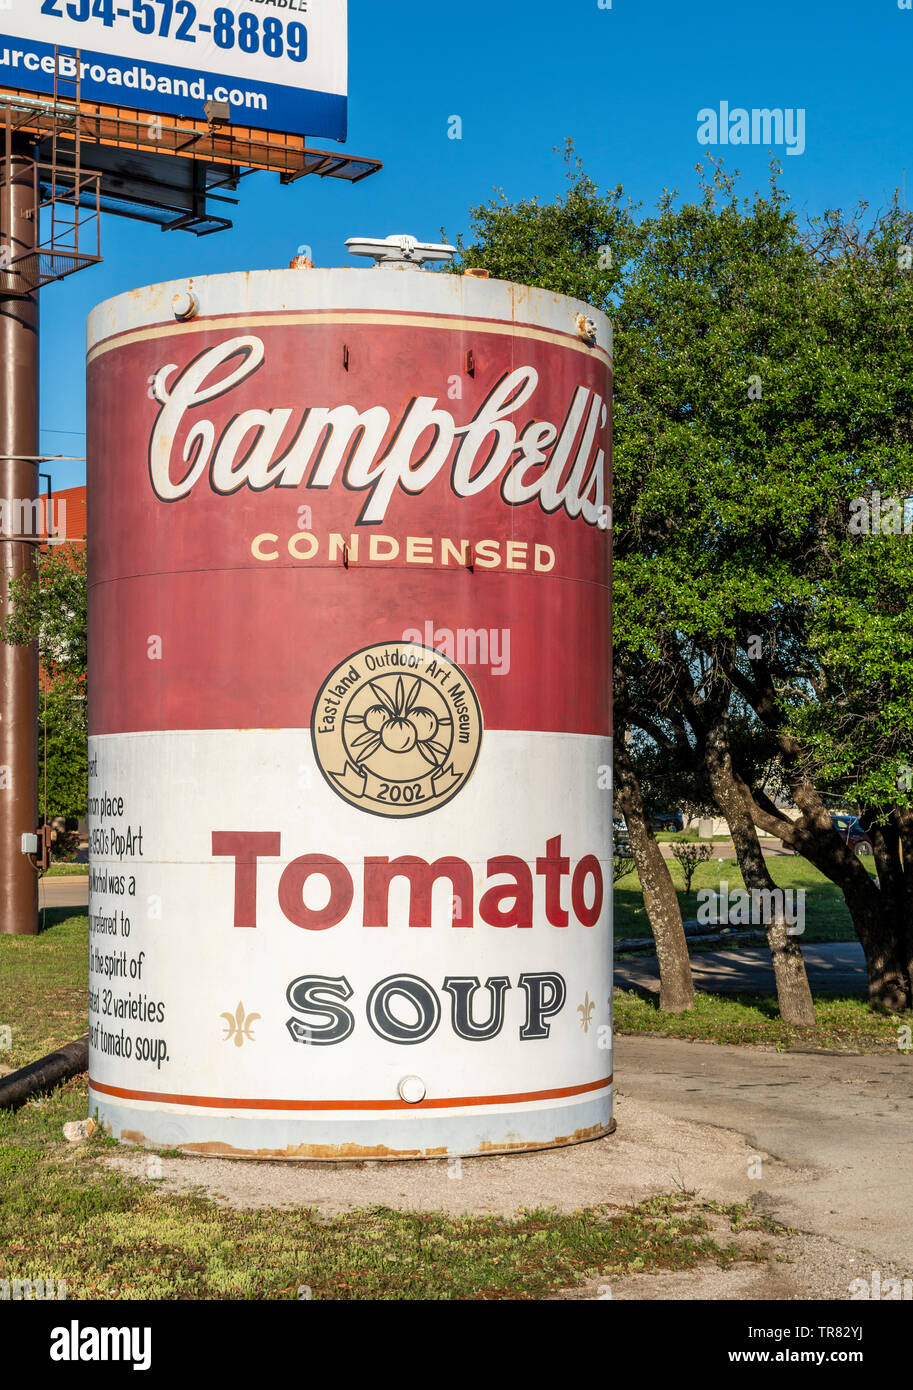 Giant's Campbell Tomatensuppe, Kunst Museum mit Nachbildungen von berühmten Kunstwerken, Eastland, Texas, USA. Stockfoto